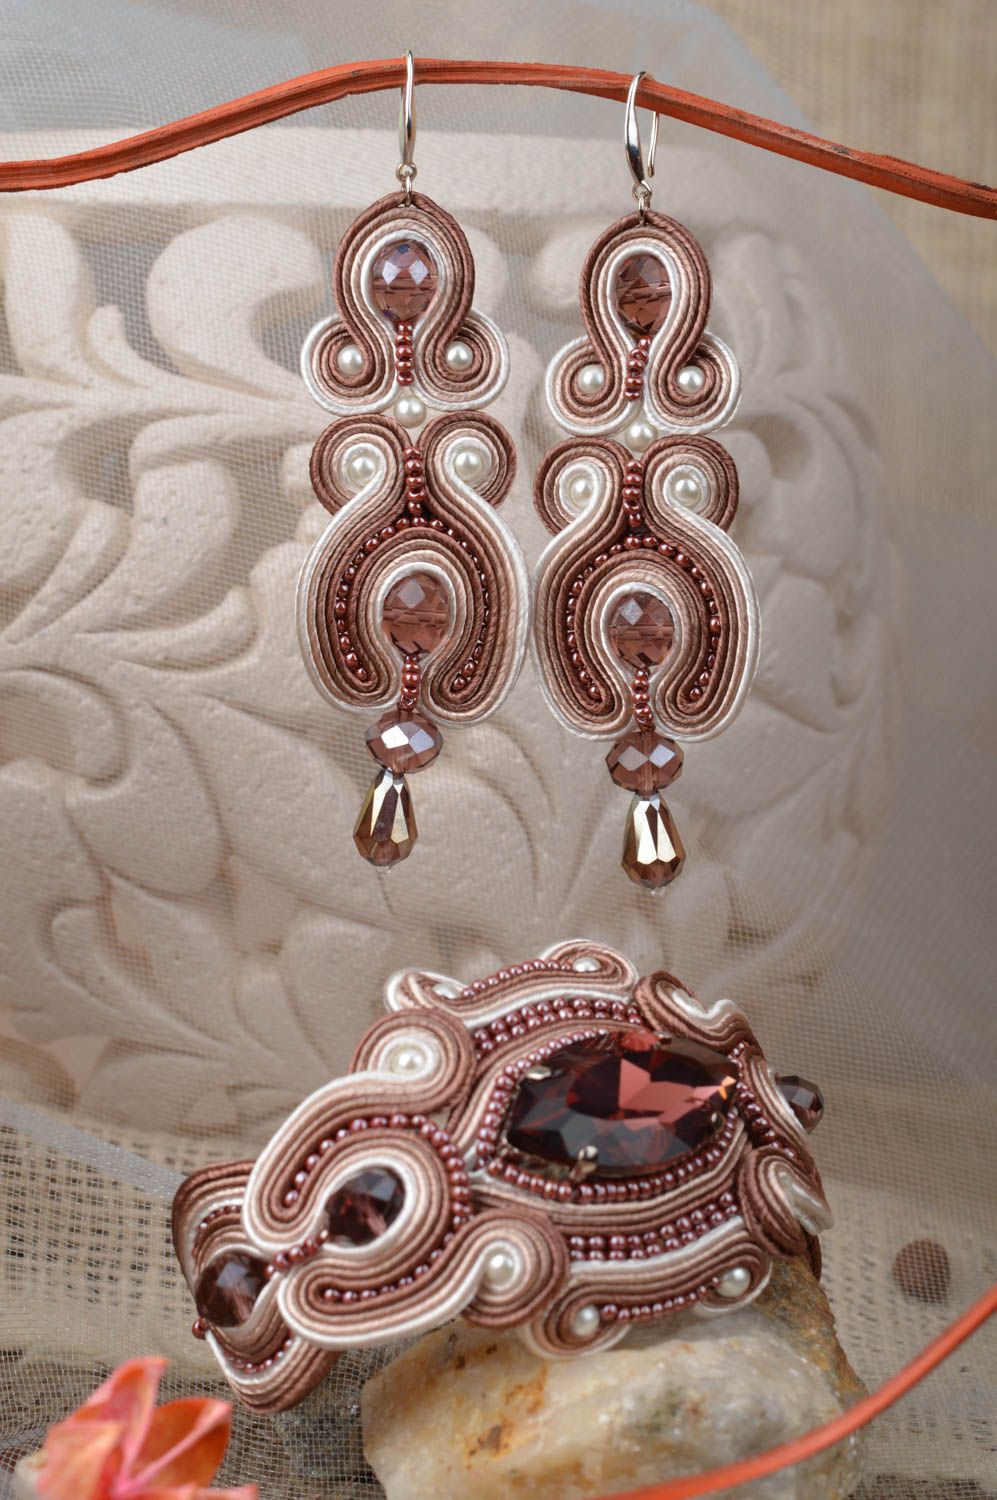 Handmade massive beige bracelet and earrings created using soutache technique photo 1